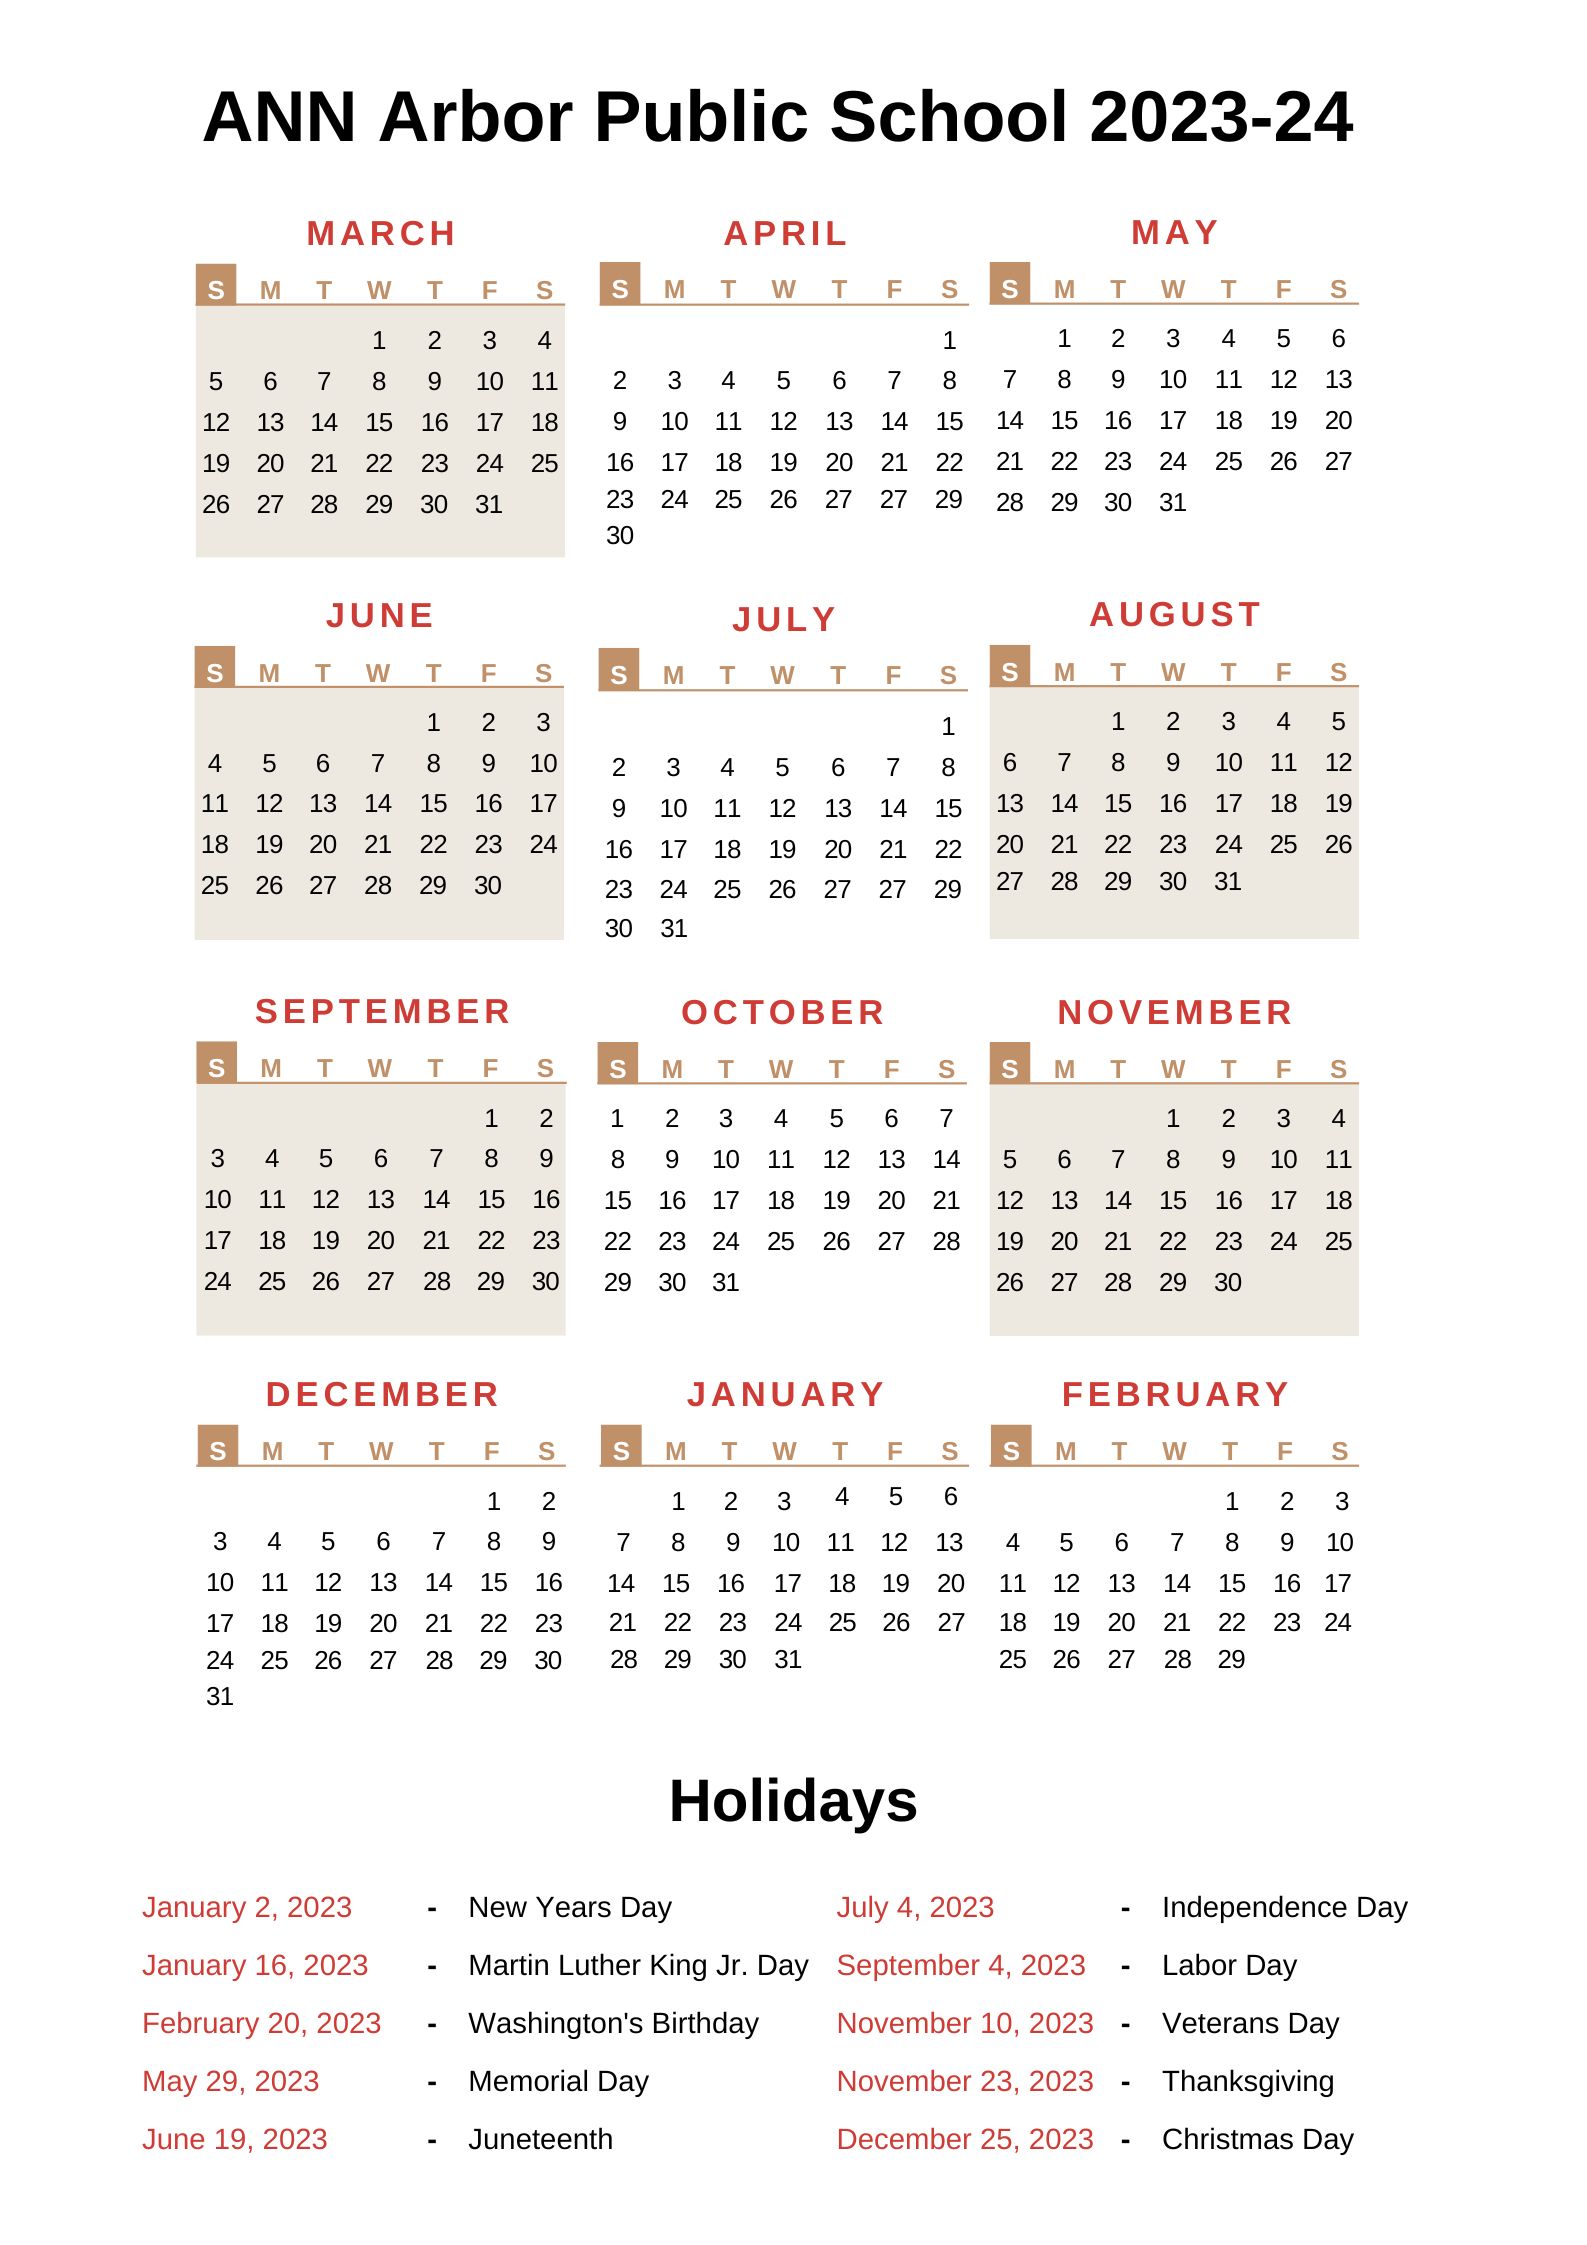 Ann Arbor Public Schools Calendar AAPS 2023 24 with Holidays